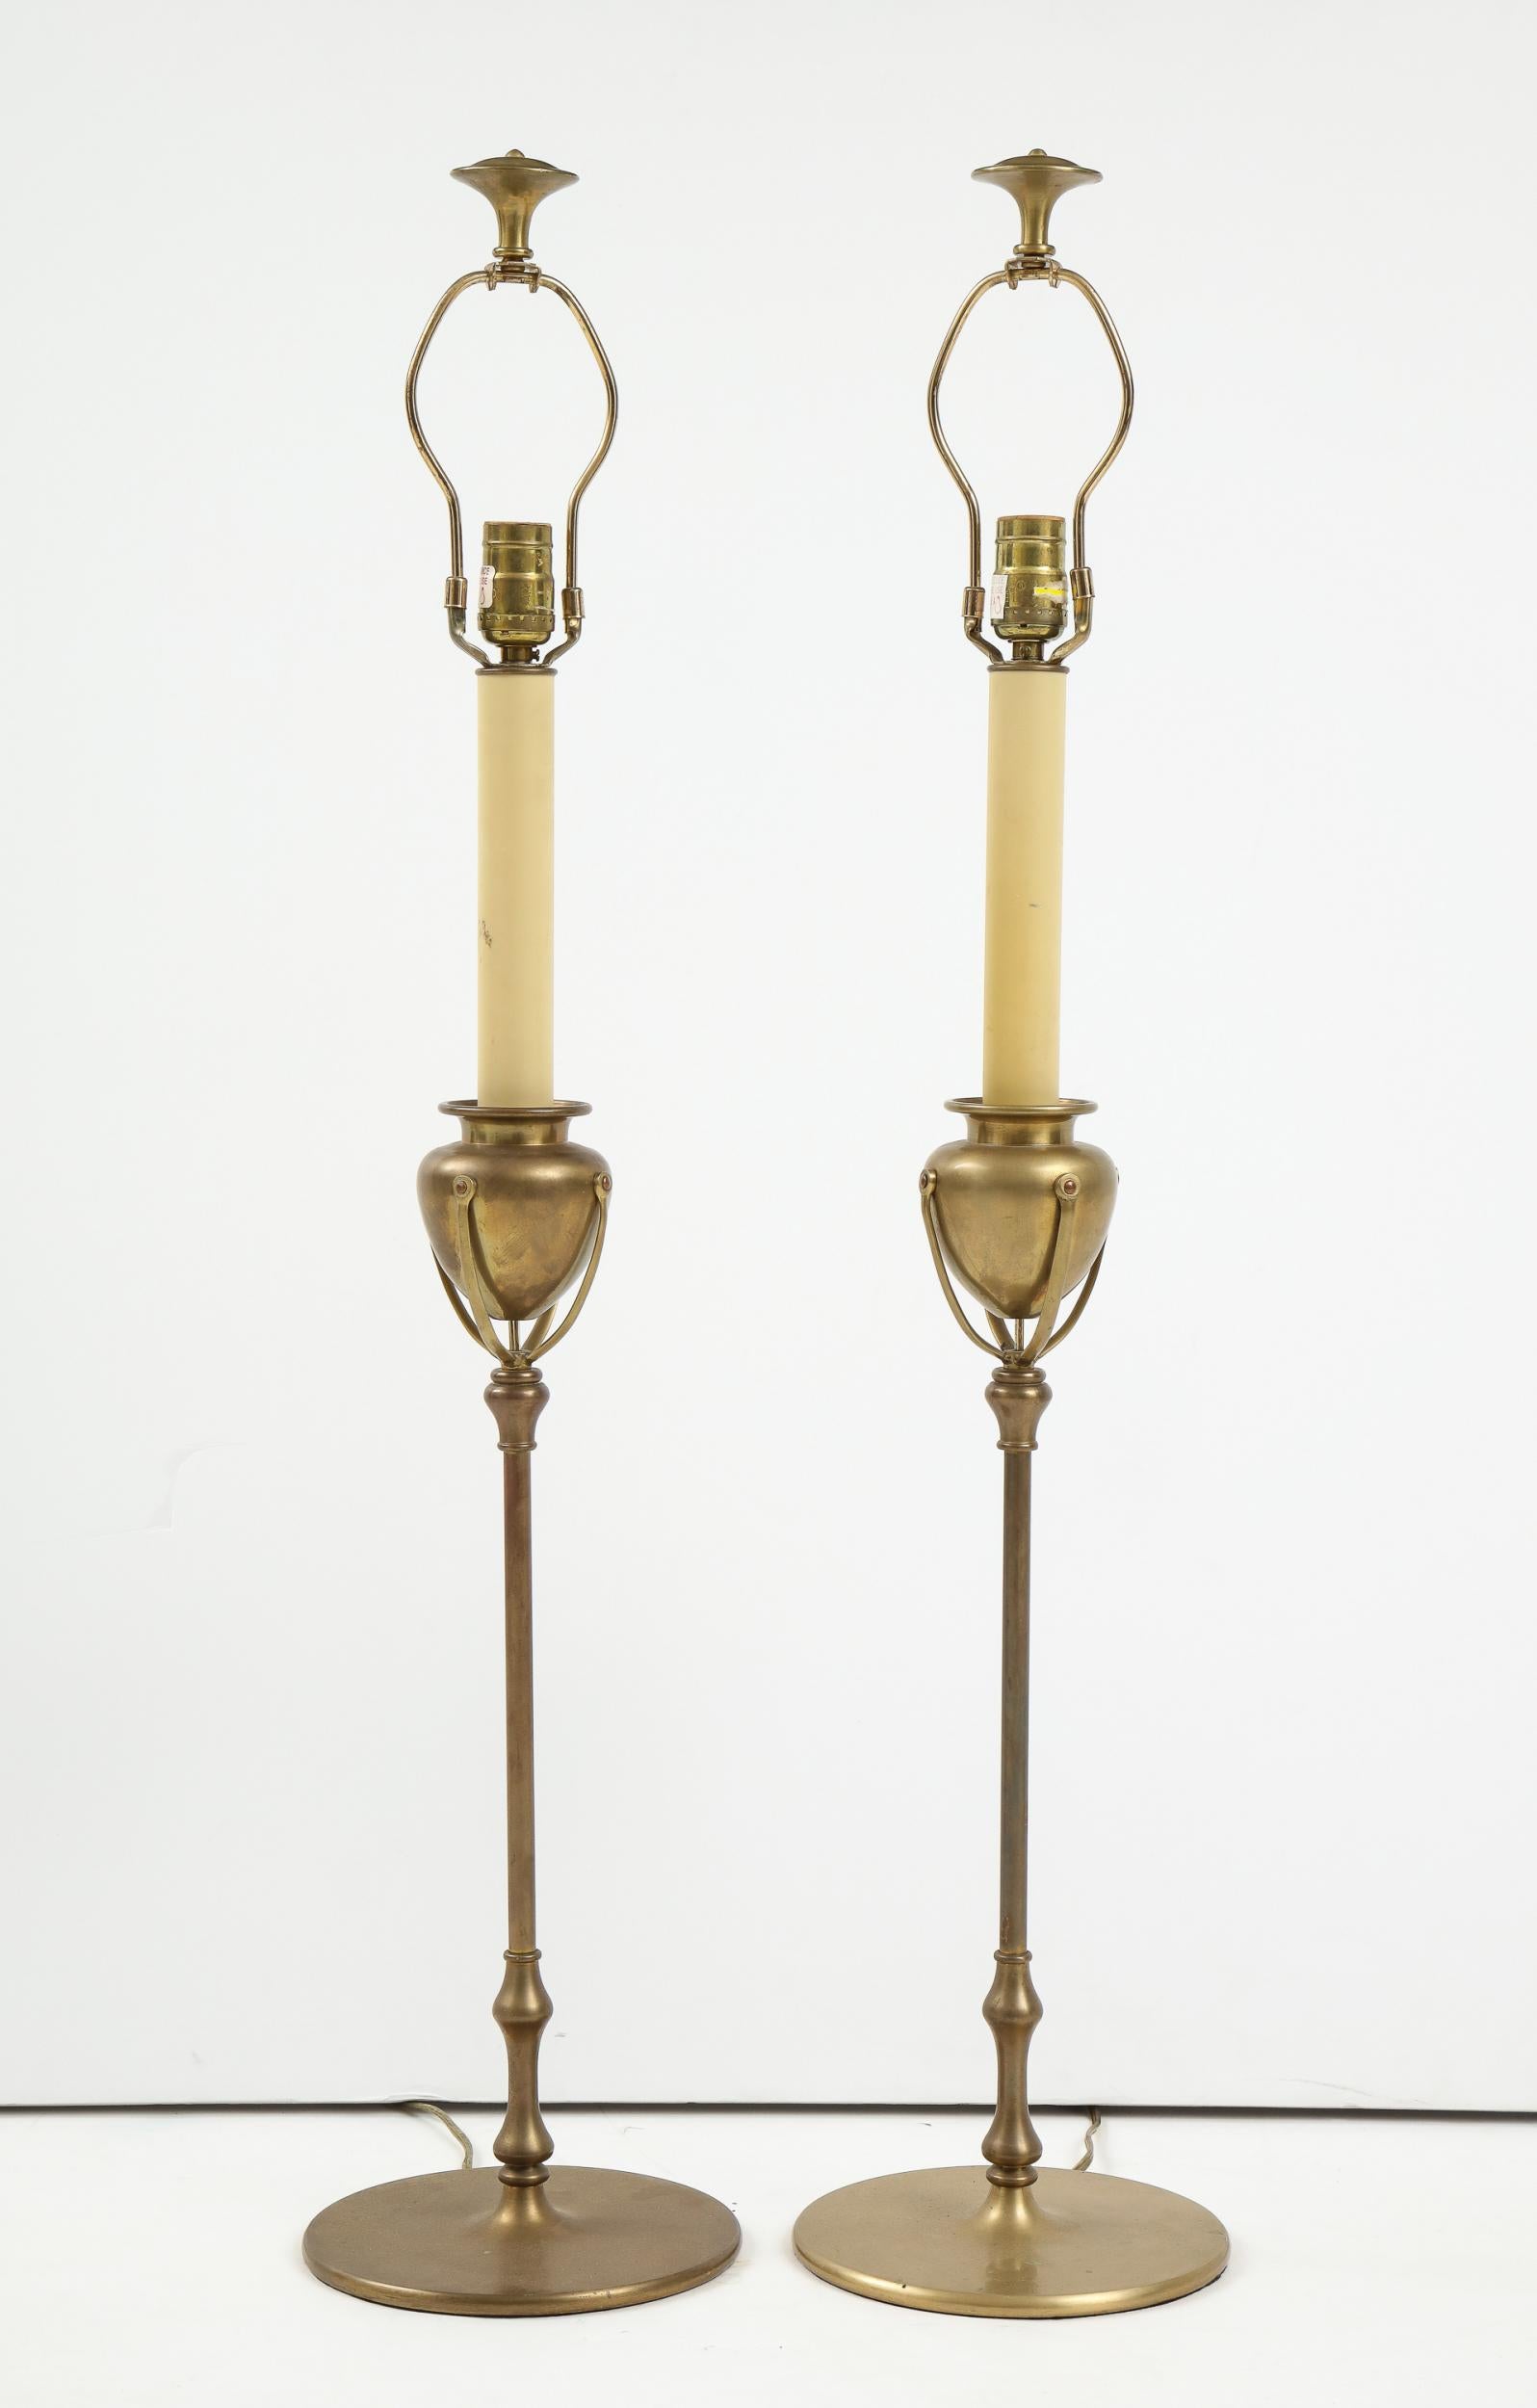 Pair of Louis Comfort Tiffany Inspired Lamps 1